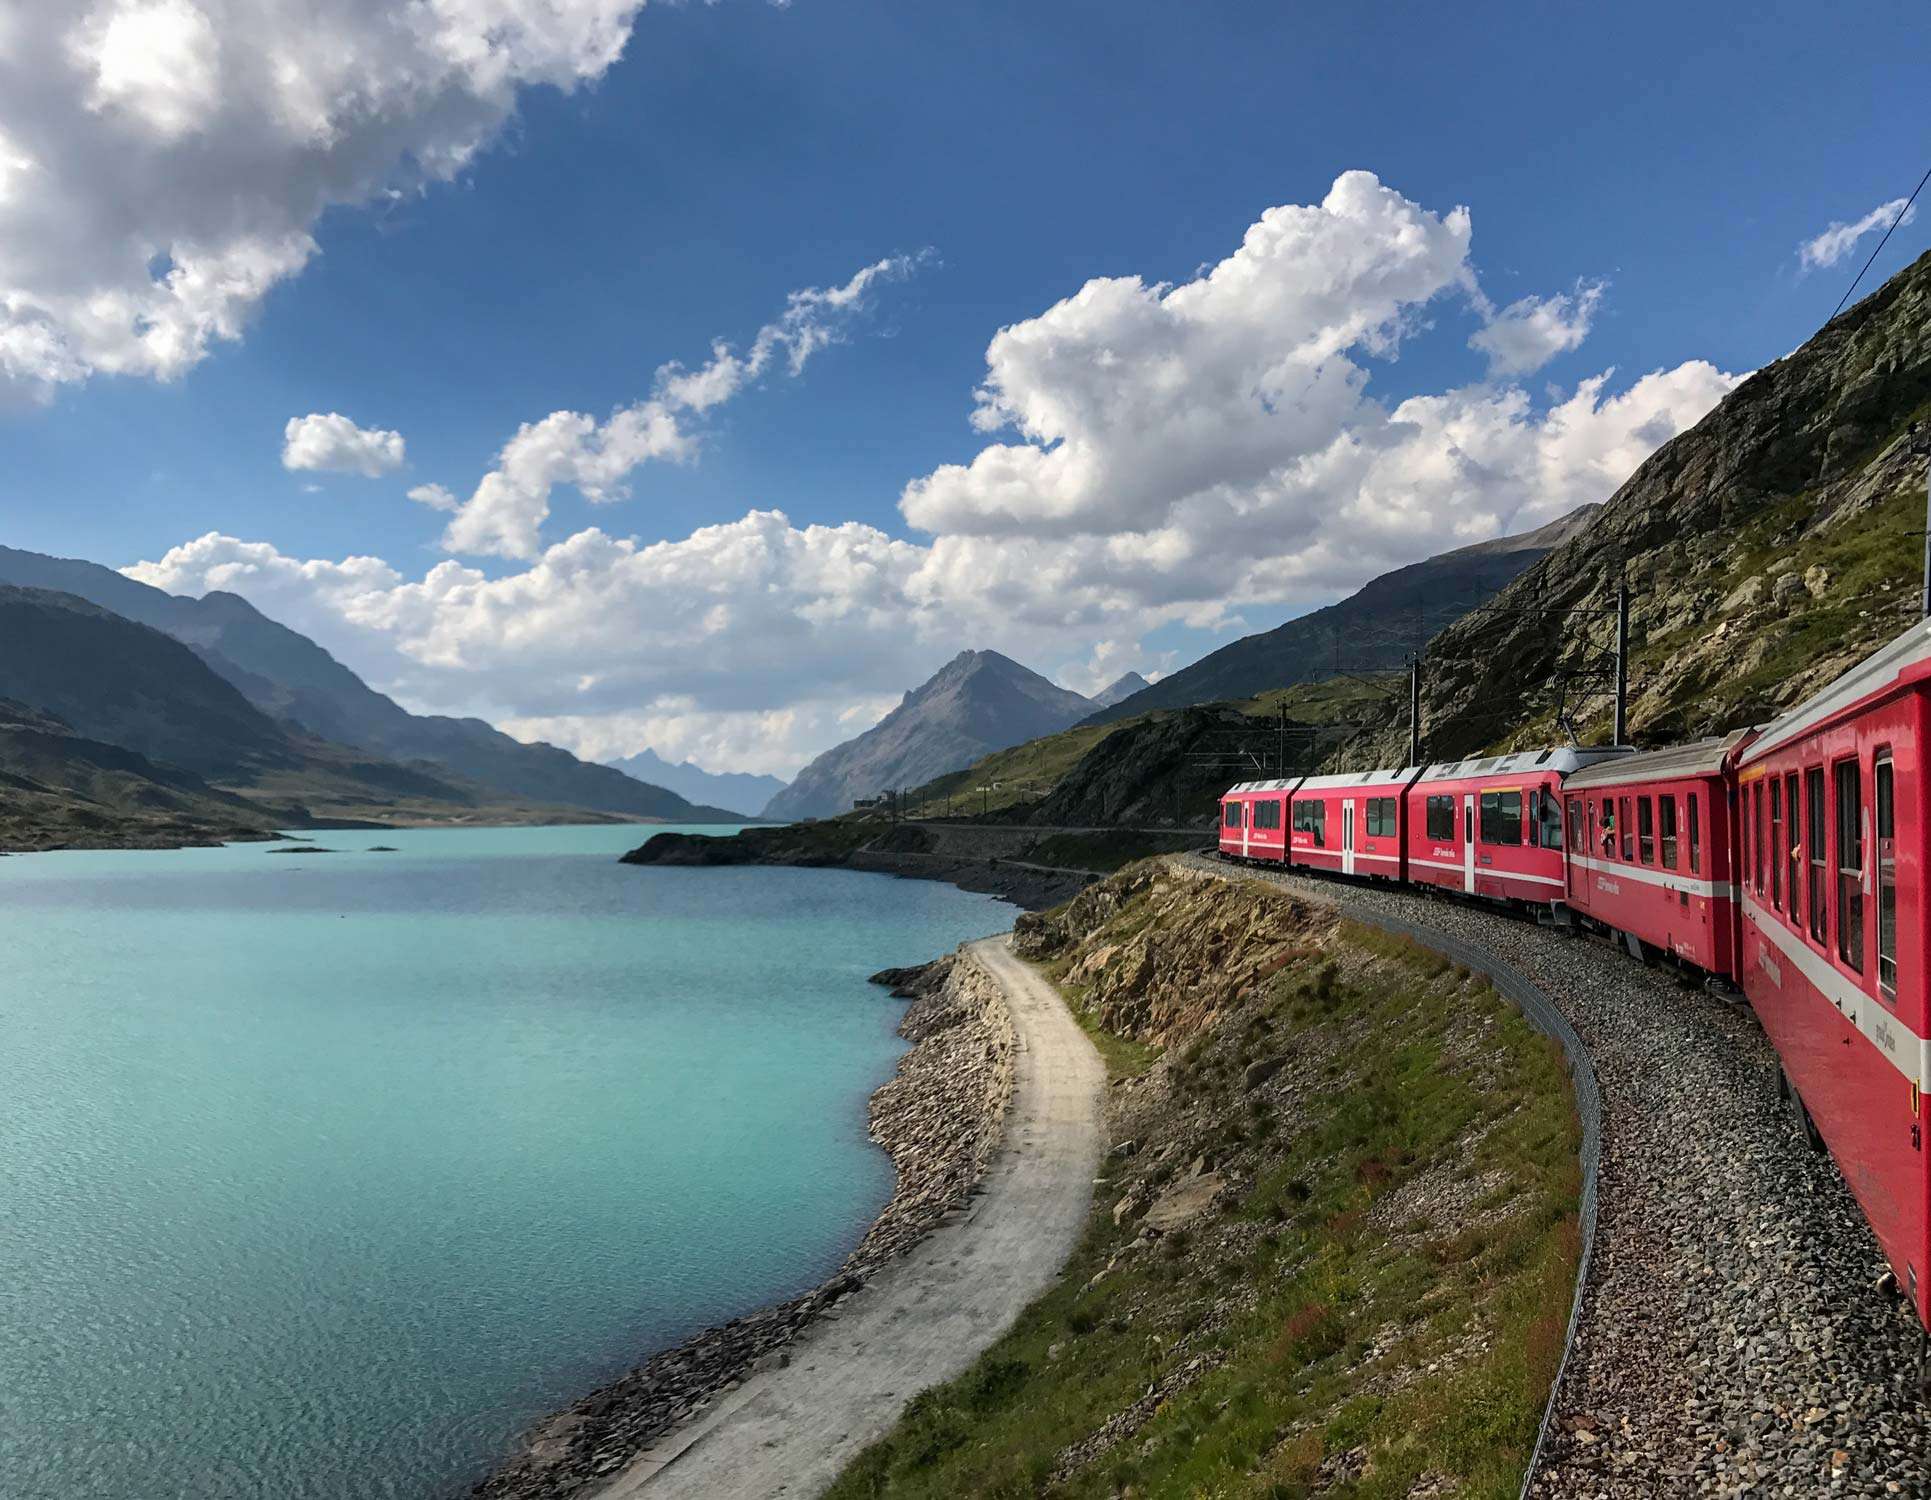 Red train traveling near a swiss lake